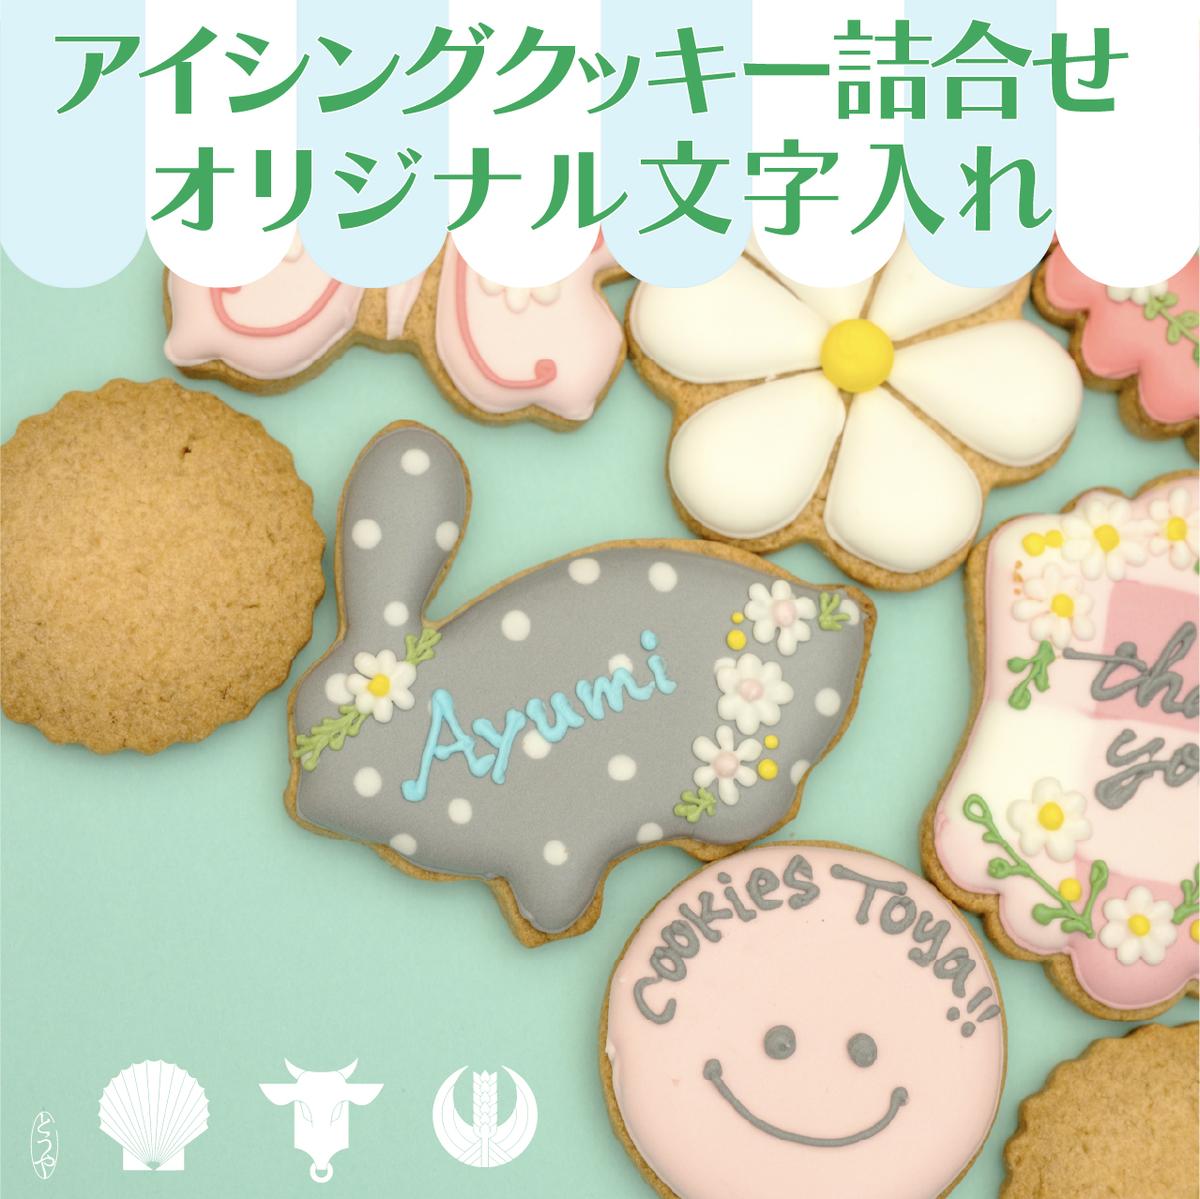 cookies Toya!!　アイシングクッキー詰合せ 「オリジナル文字入れ」　【 お菓子 焼菓子 クッキー アイシングクッキー 】